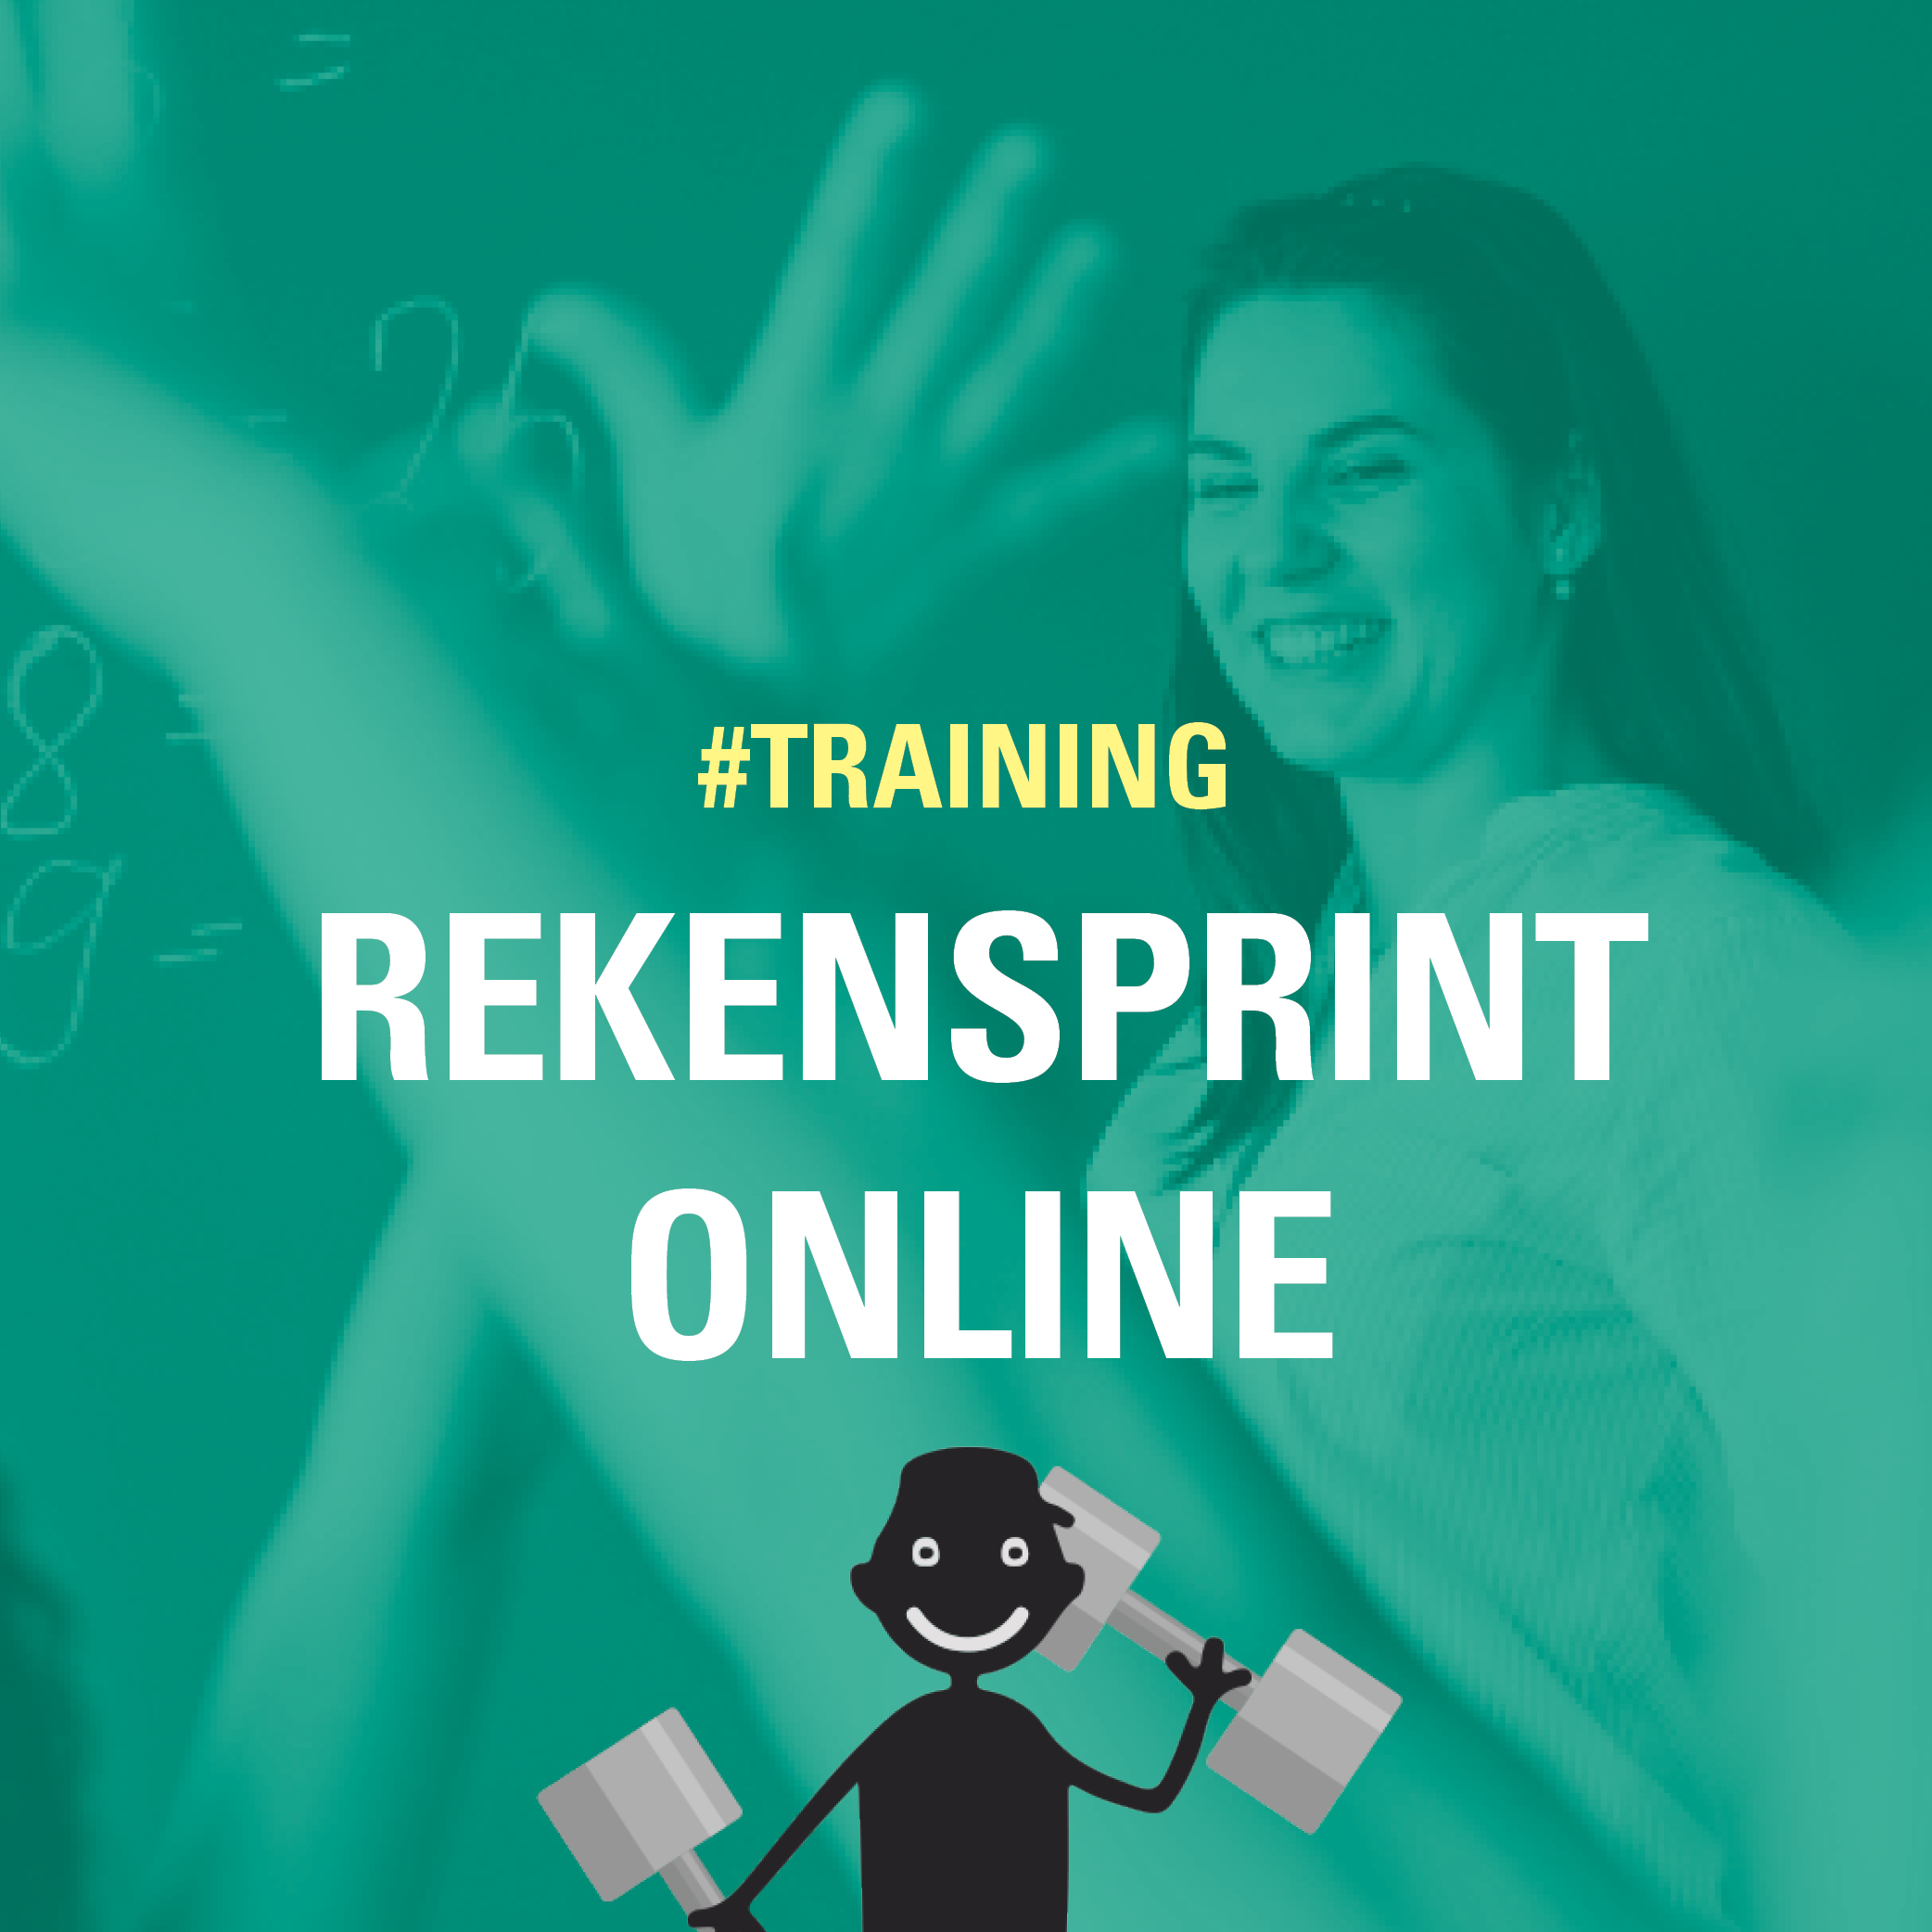 Rekensprint Online